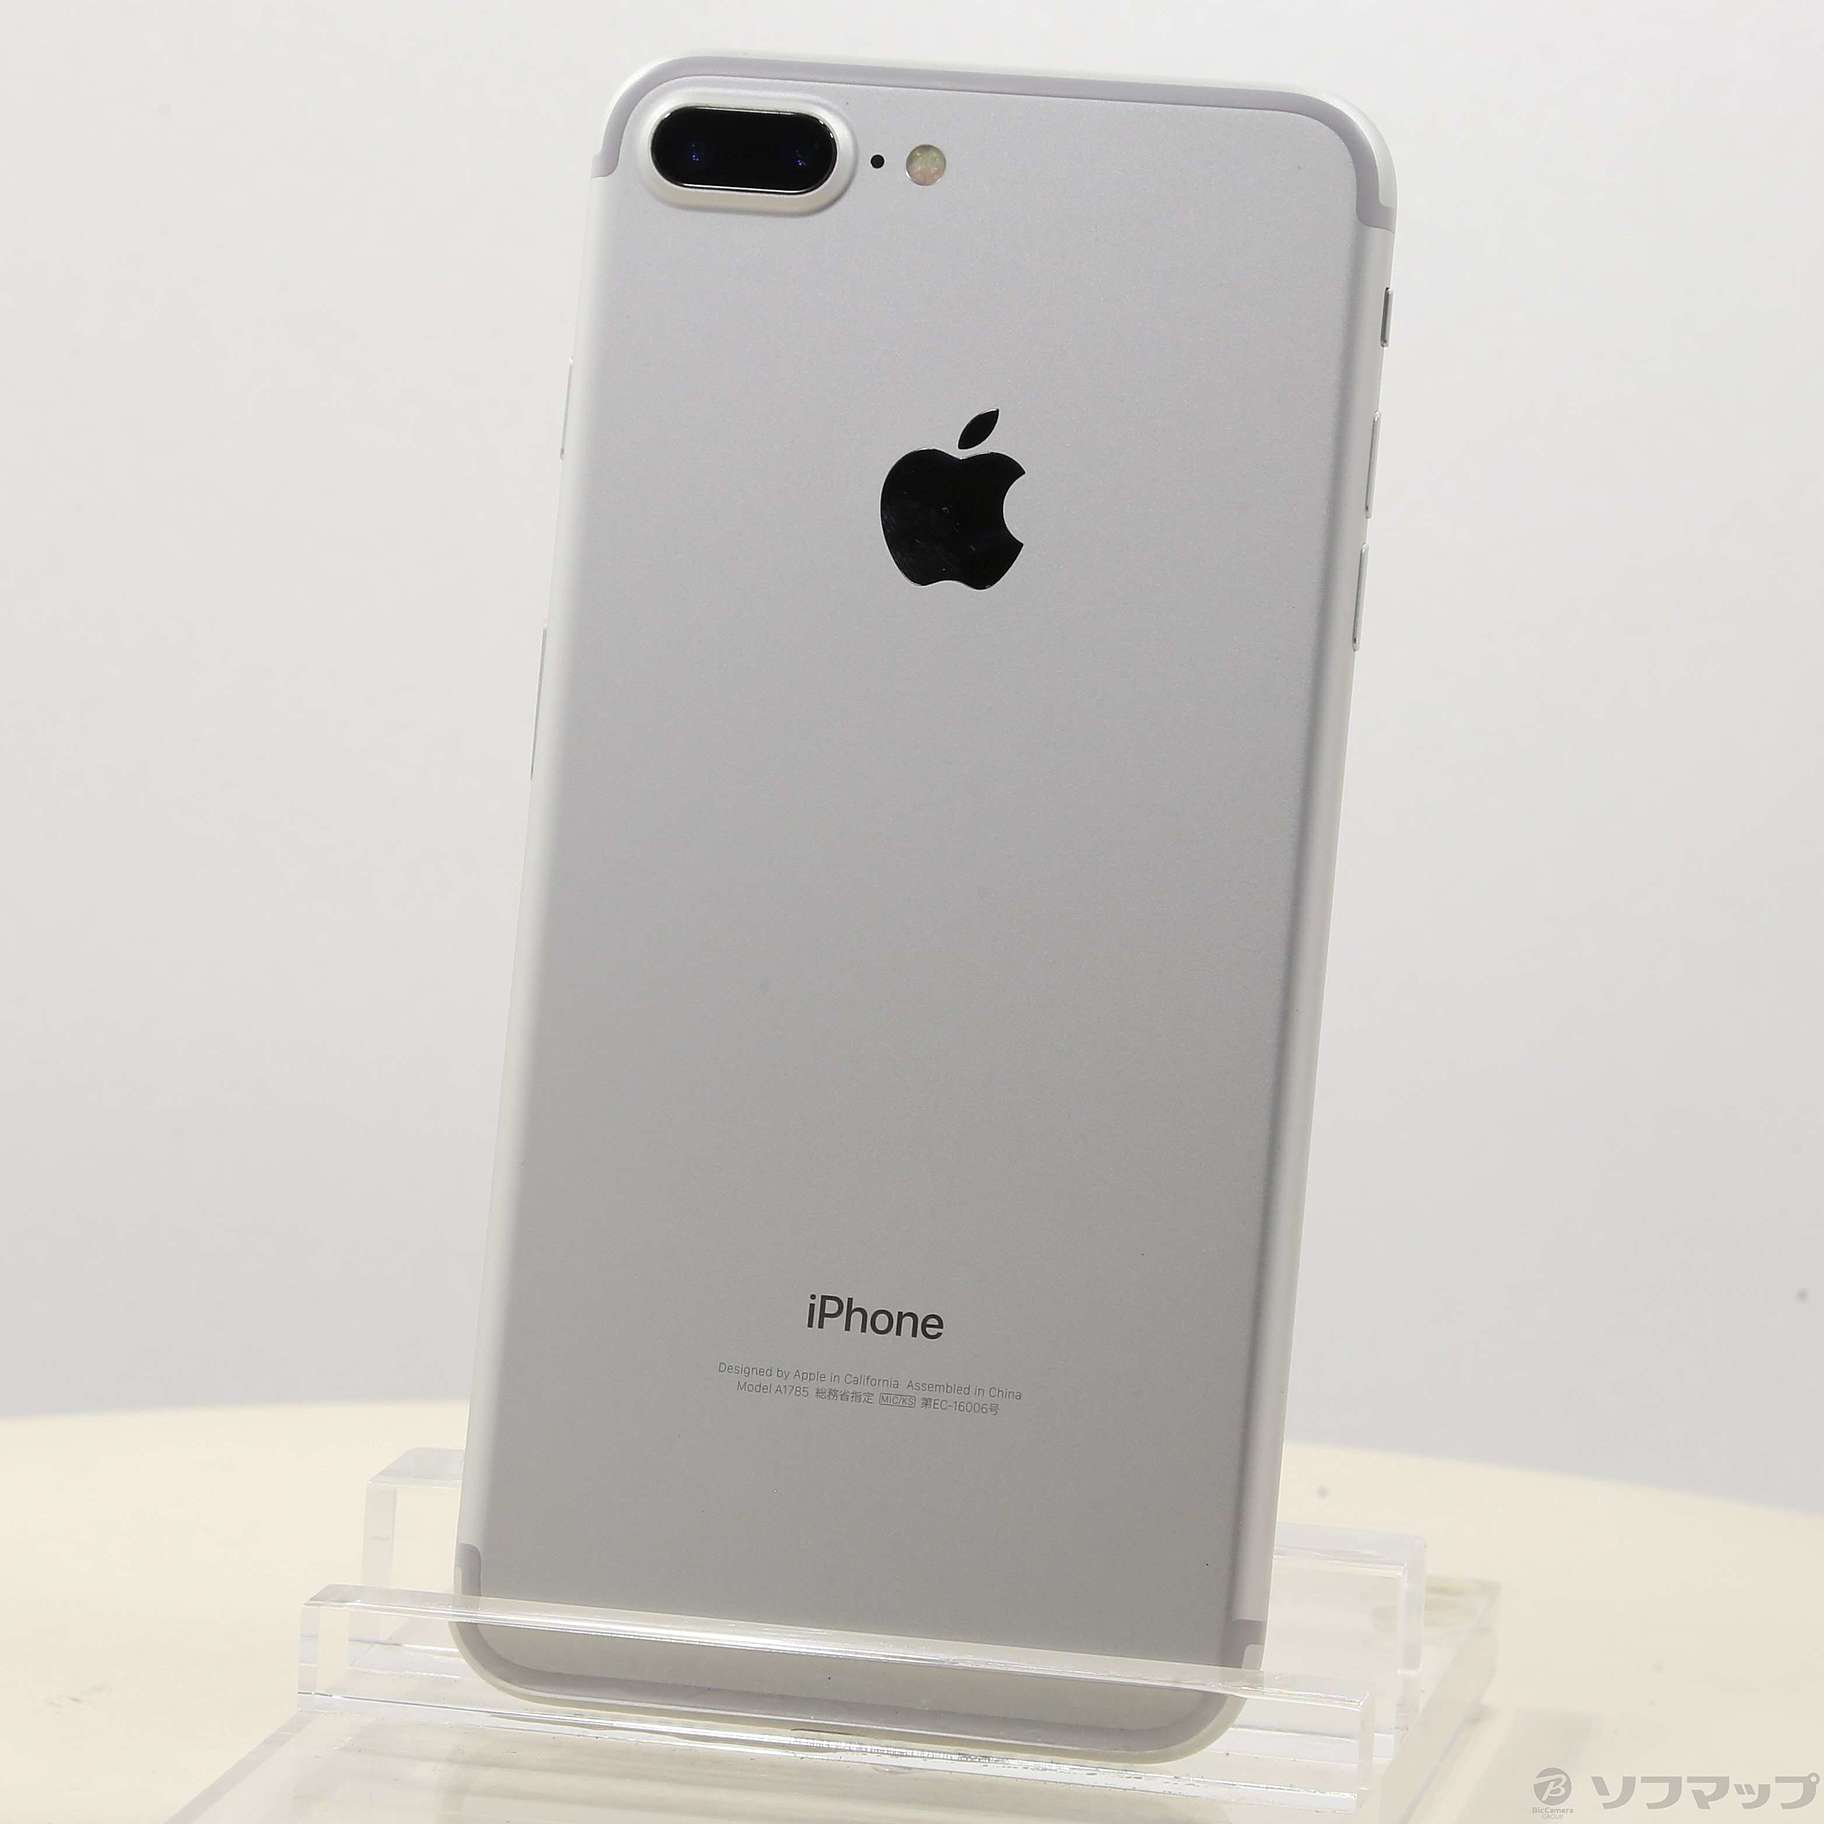 iPhone 7 Plus 32GB SIMフリー版 シルバー - スマートフォン本体